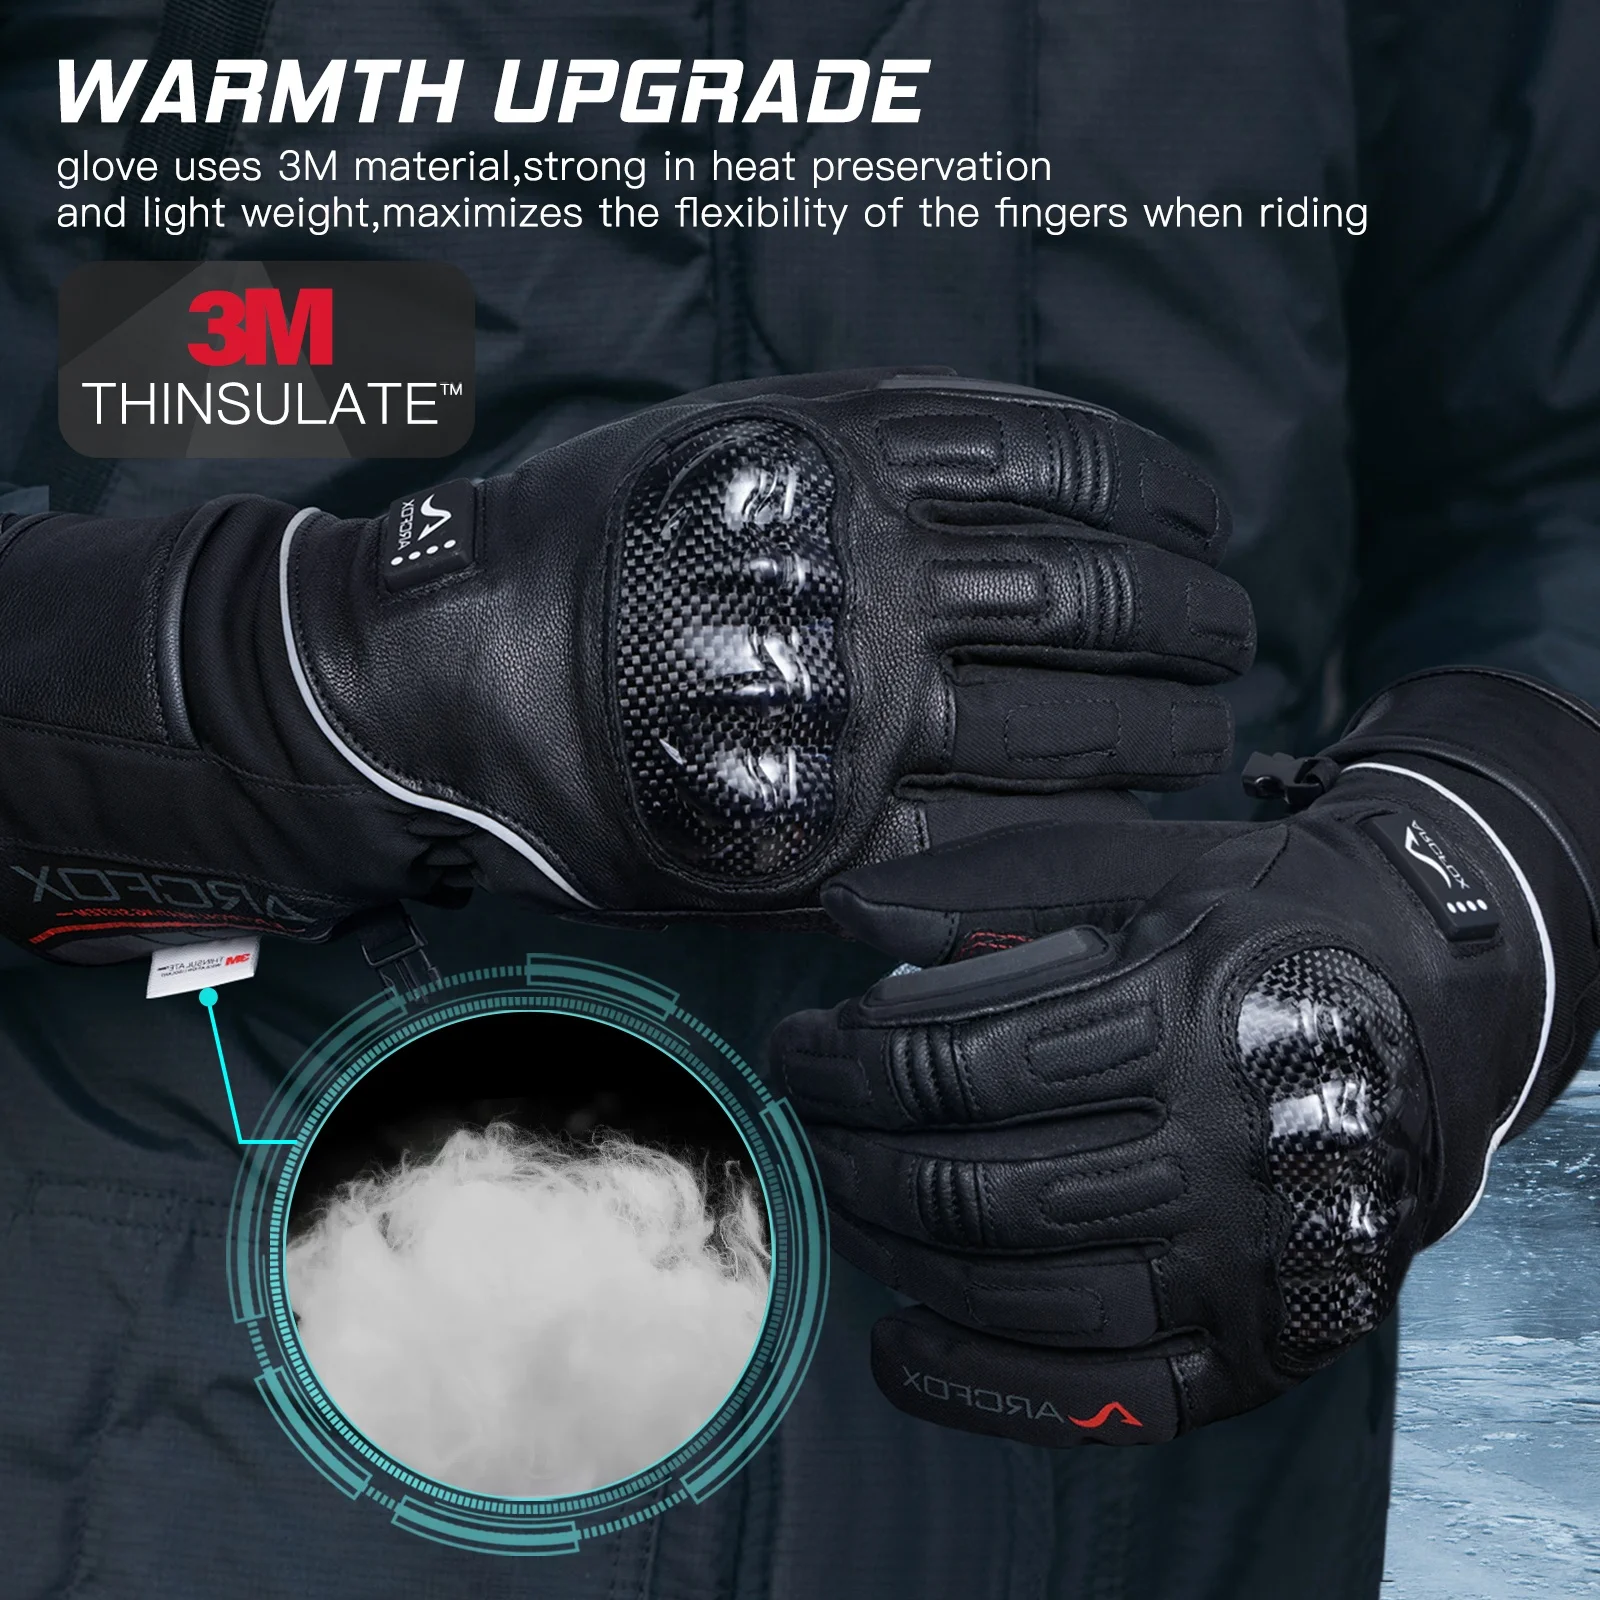 ARCFOX Electric Heated Touch Screen Men Women Motorcycle Waterproof Snowproof Sheepskin Gloves Winter Skiing Warm Heated Glove